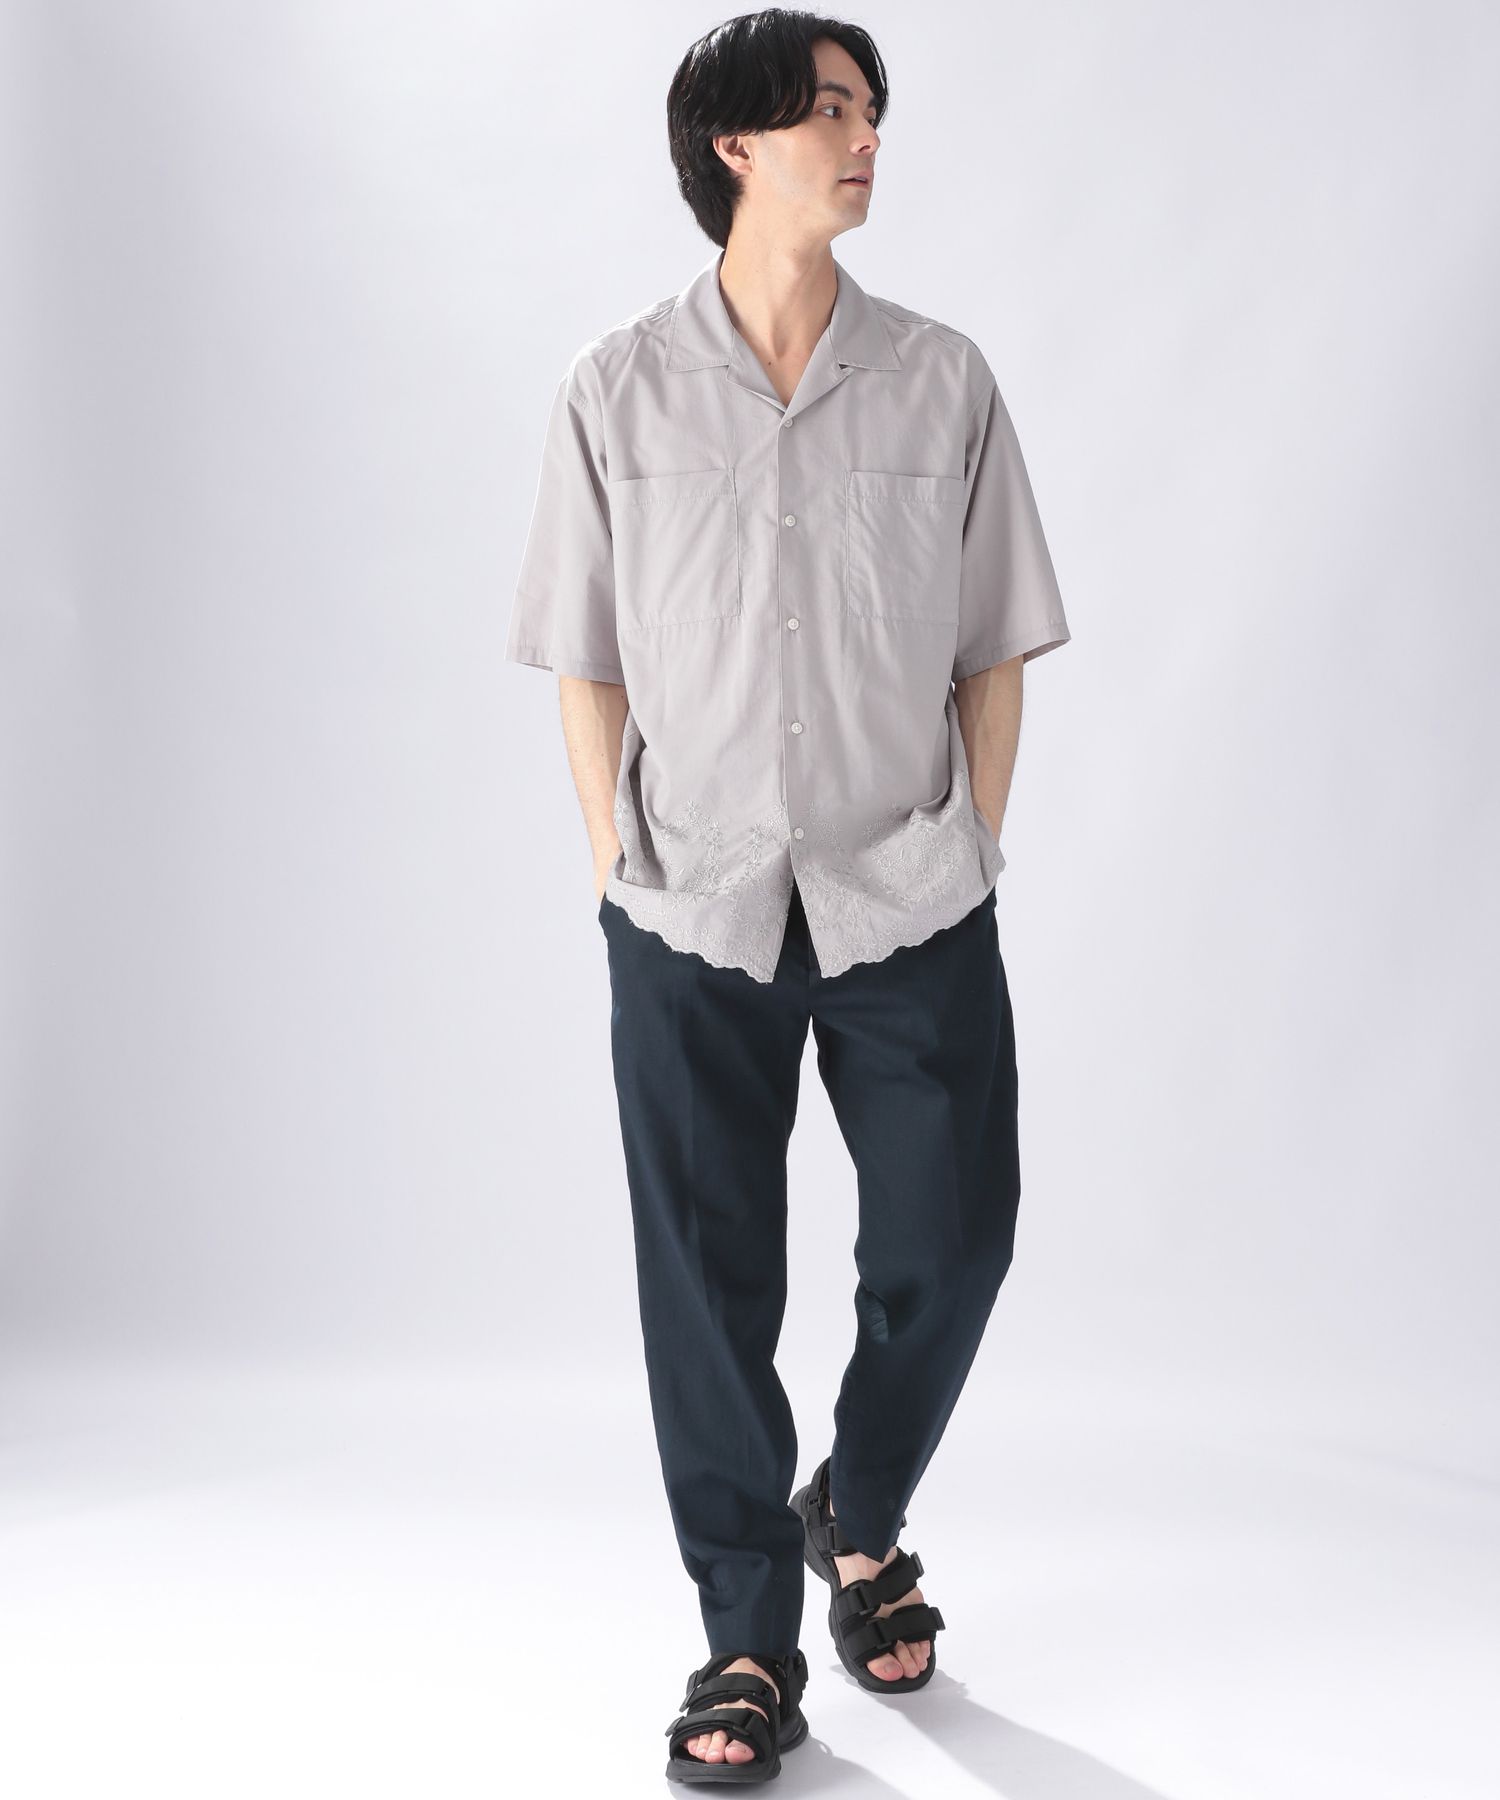 yori スカラップ刺繍サマーシャツ 38サイズ - icaten.gob.mx